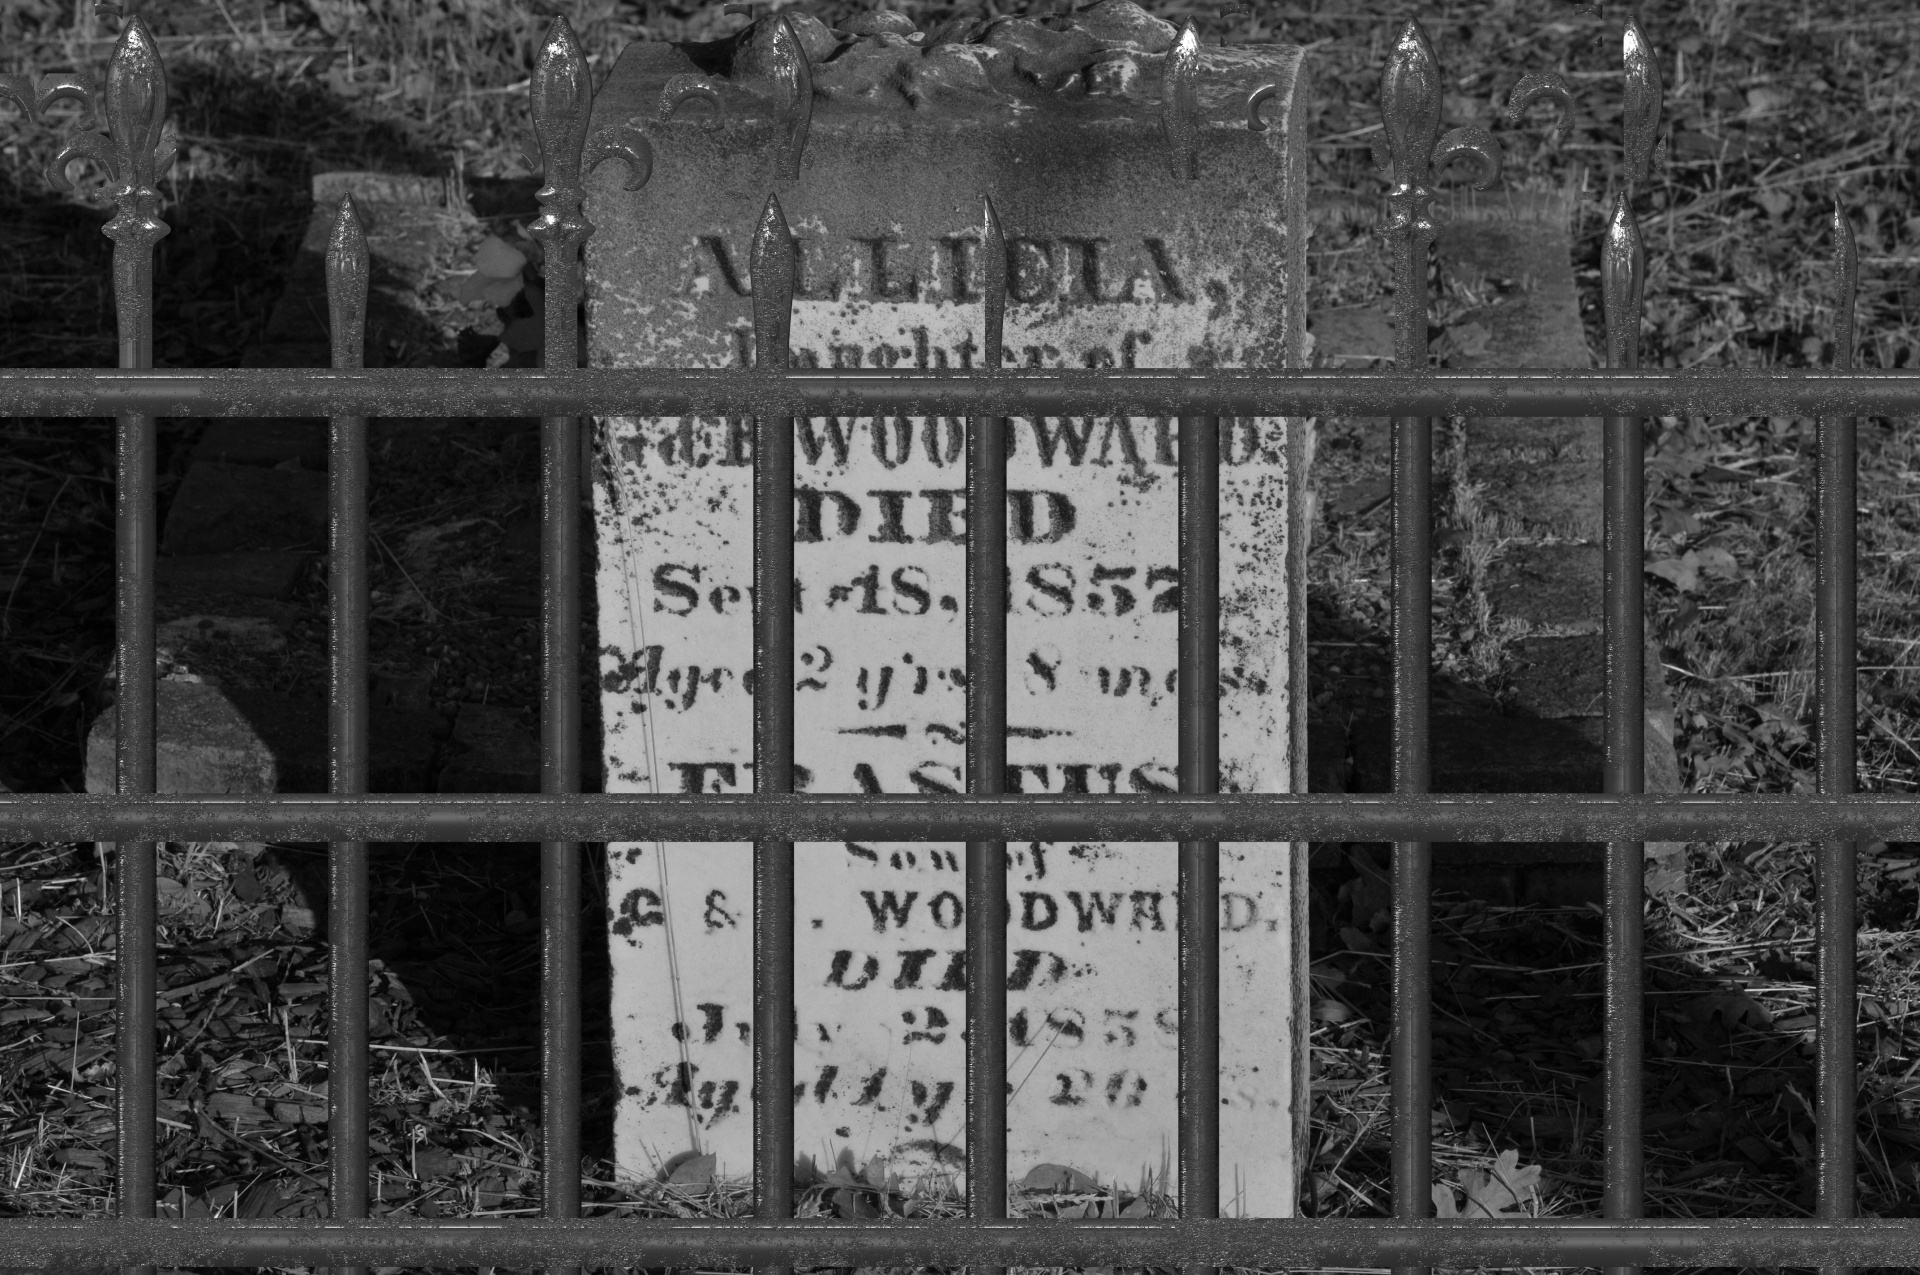 cemetery cemeteries grave free photo